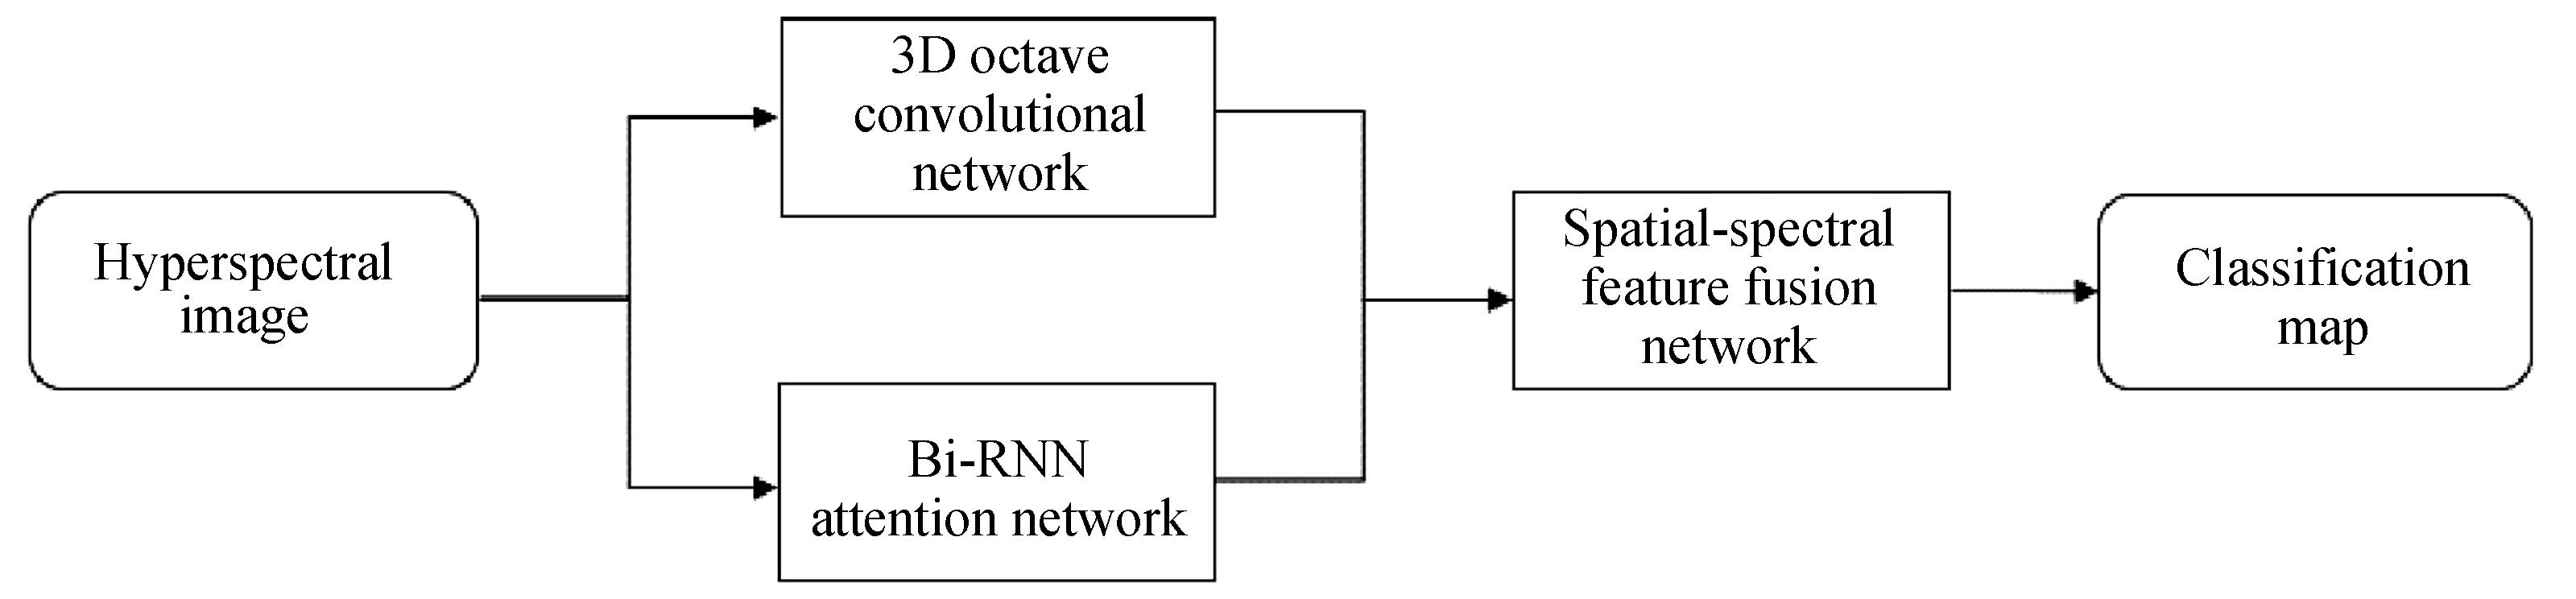 Flow of framework for 3D Octave convolution and Bi-RNN attention network